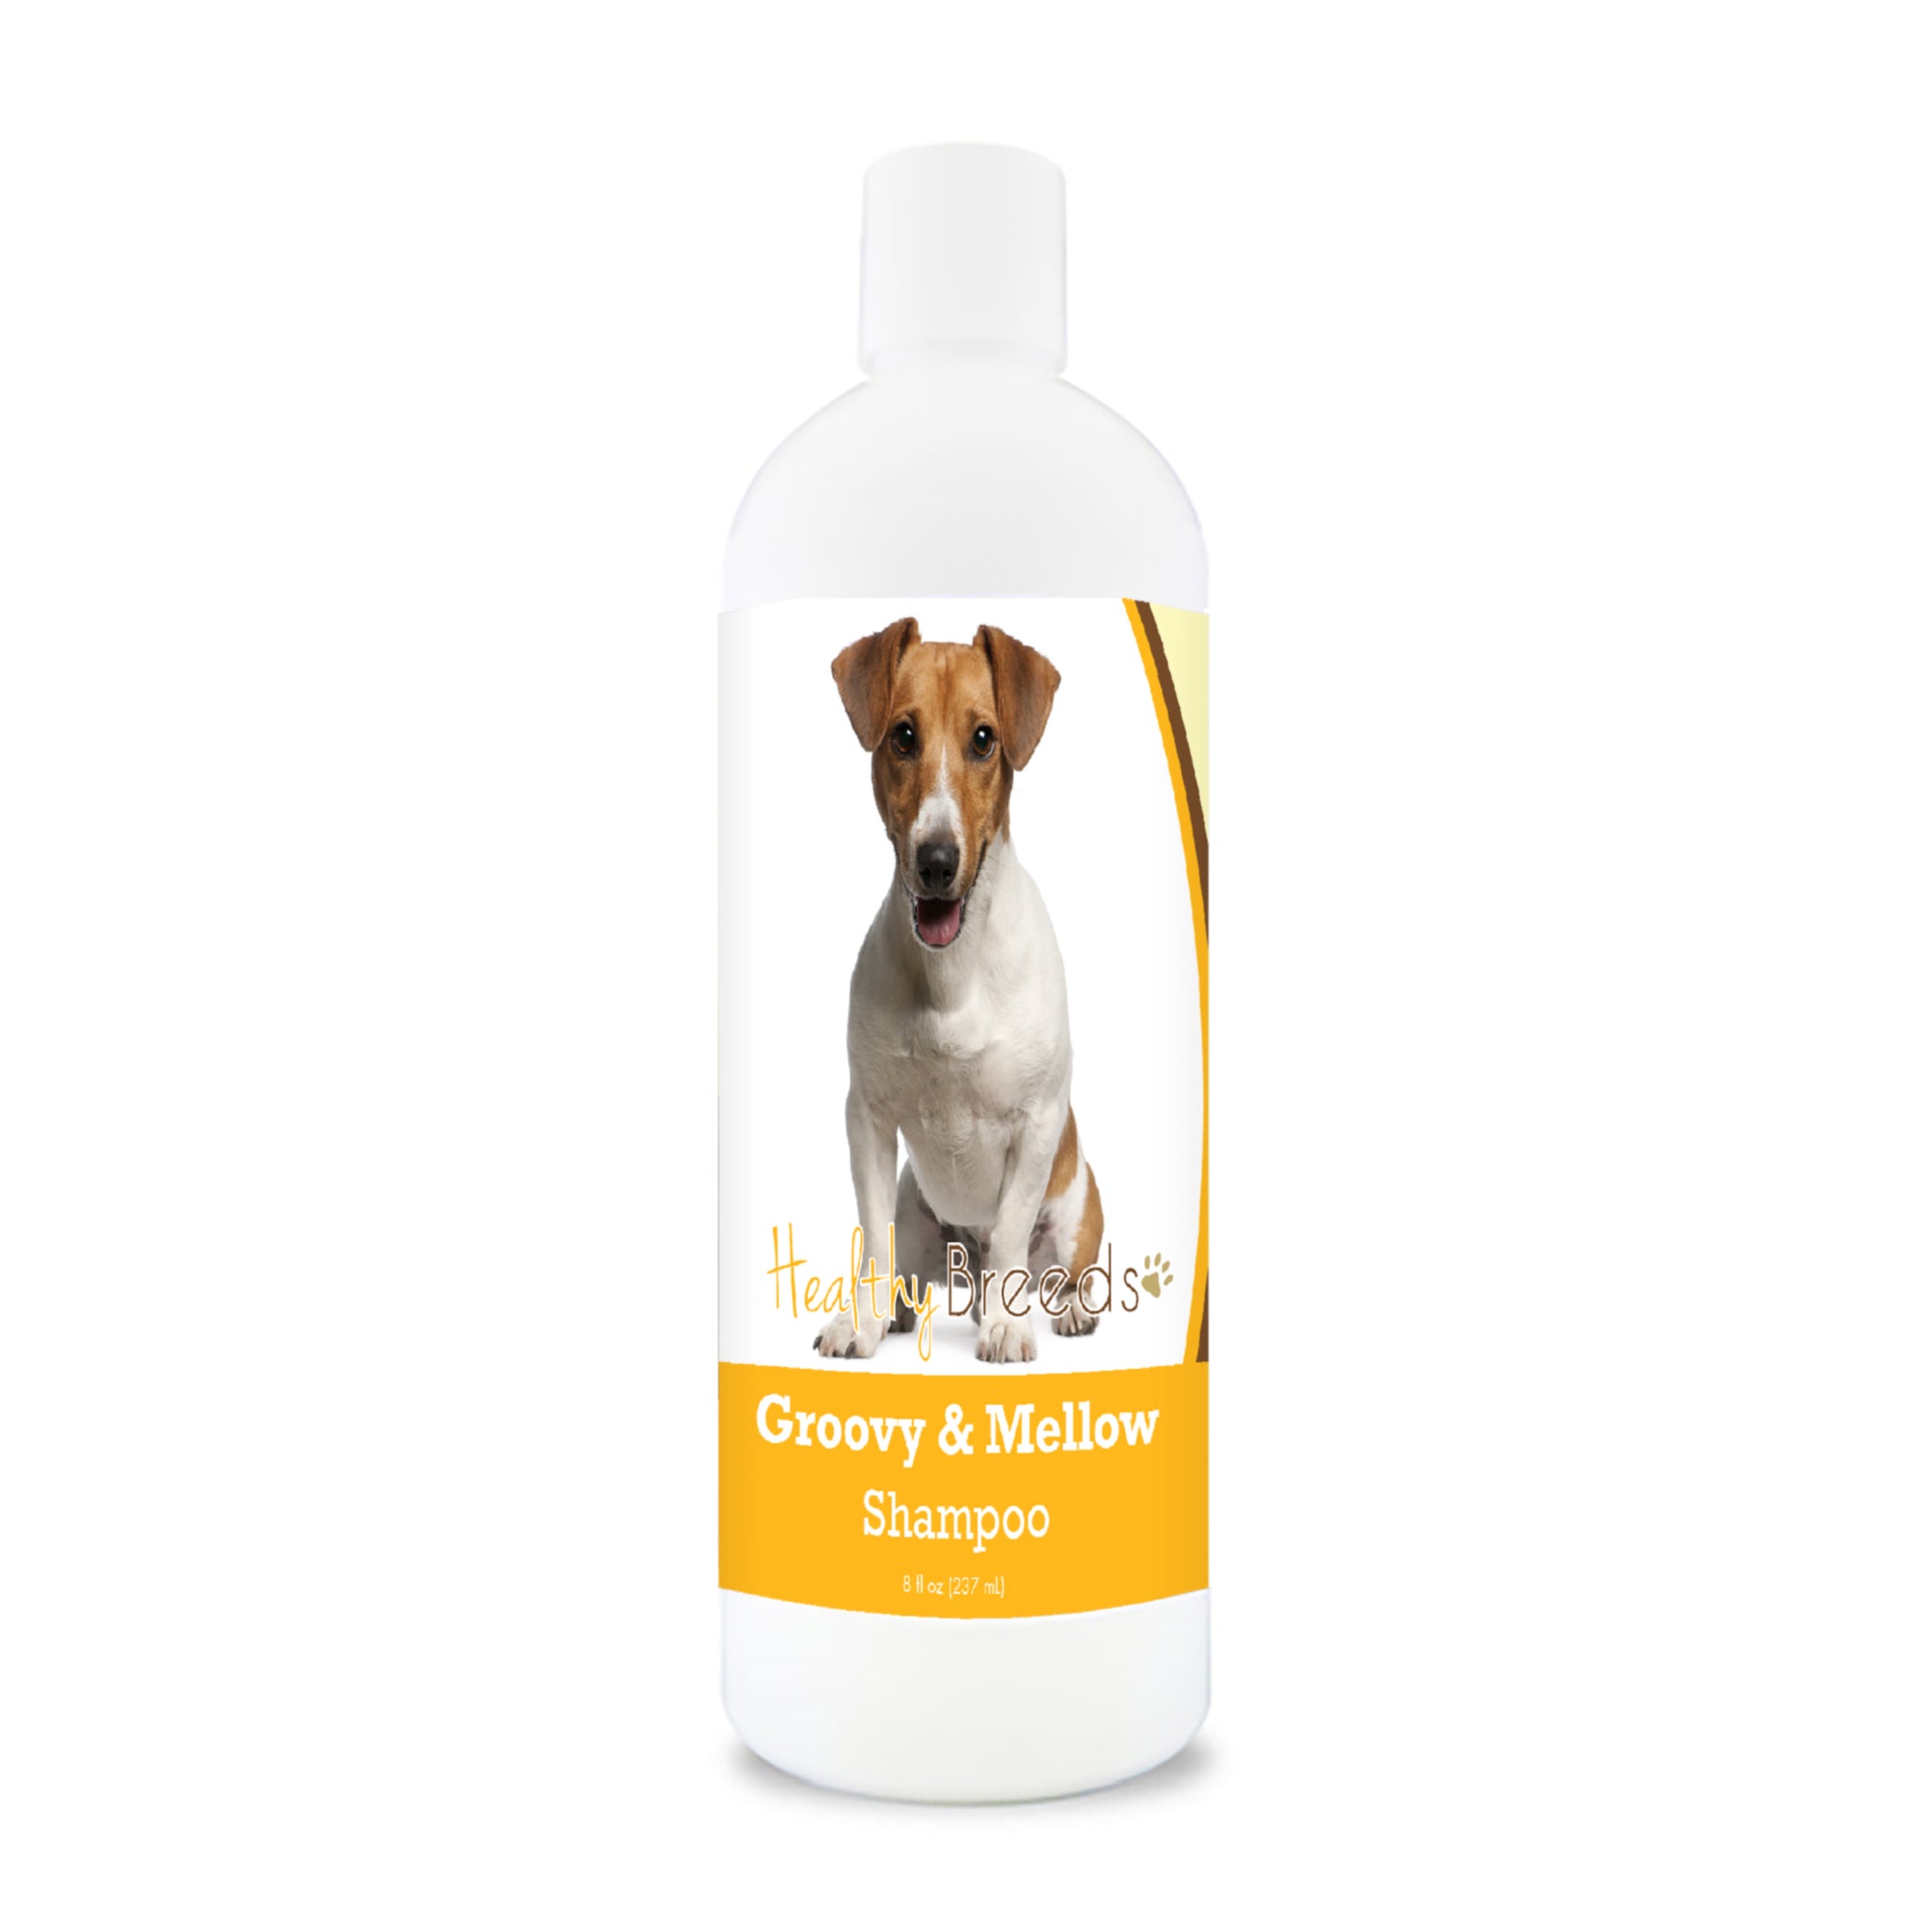 Jack Russell Terrier Groovy & Mellow Shampoo 8 oz